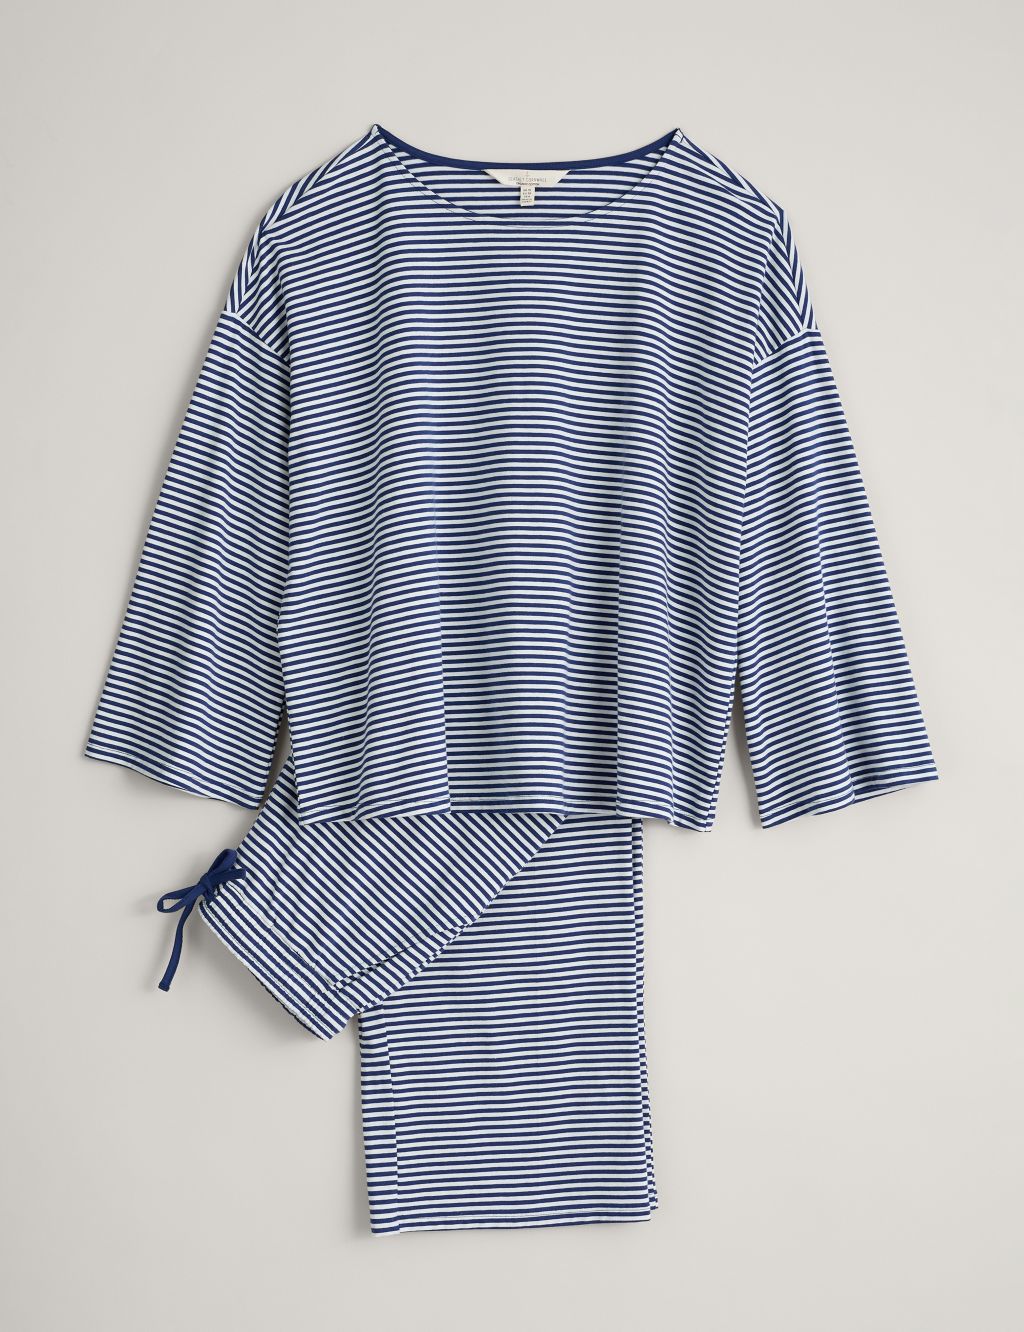 Cotton Rich Striped Cropped Pyjama Set 1 of 5